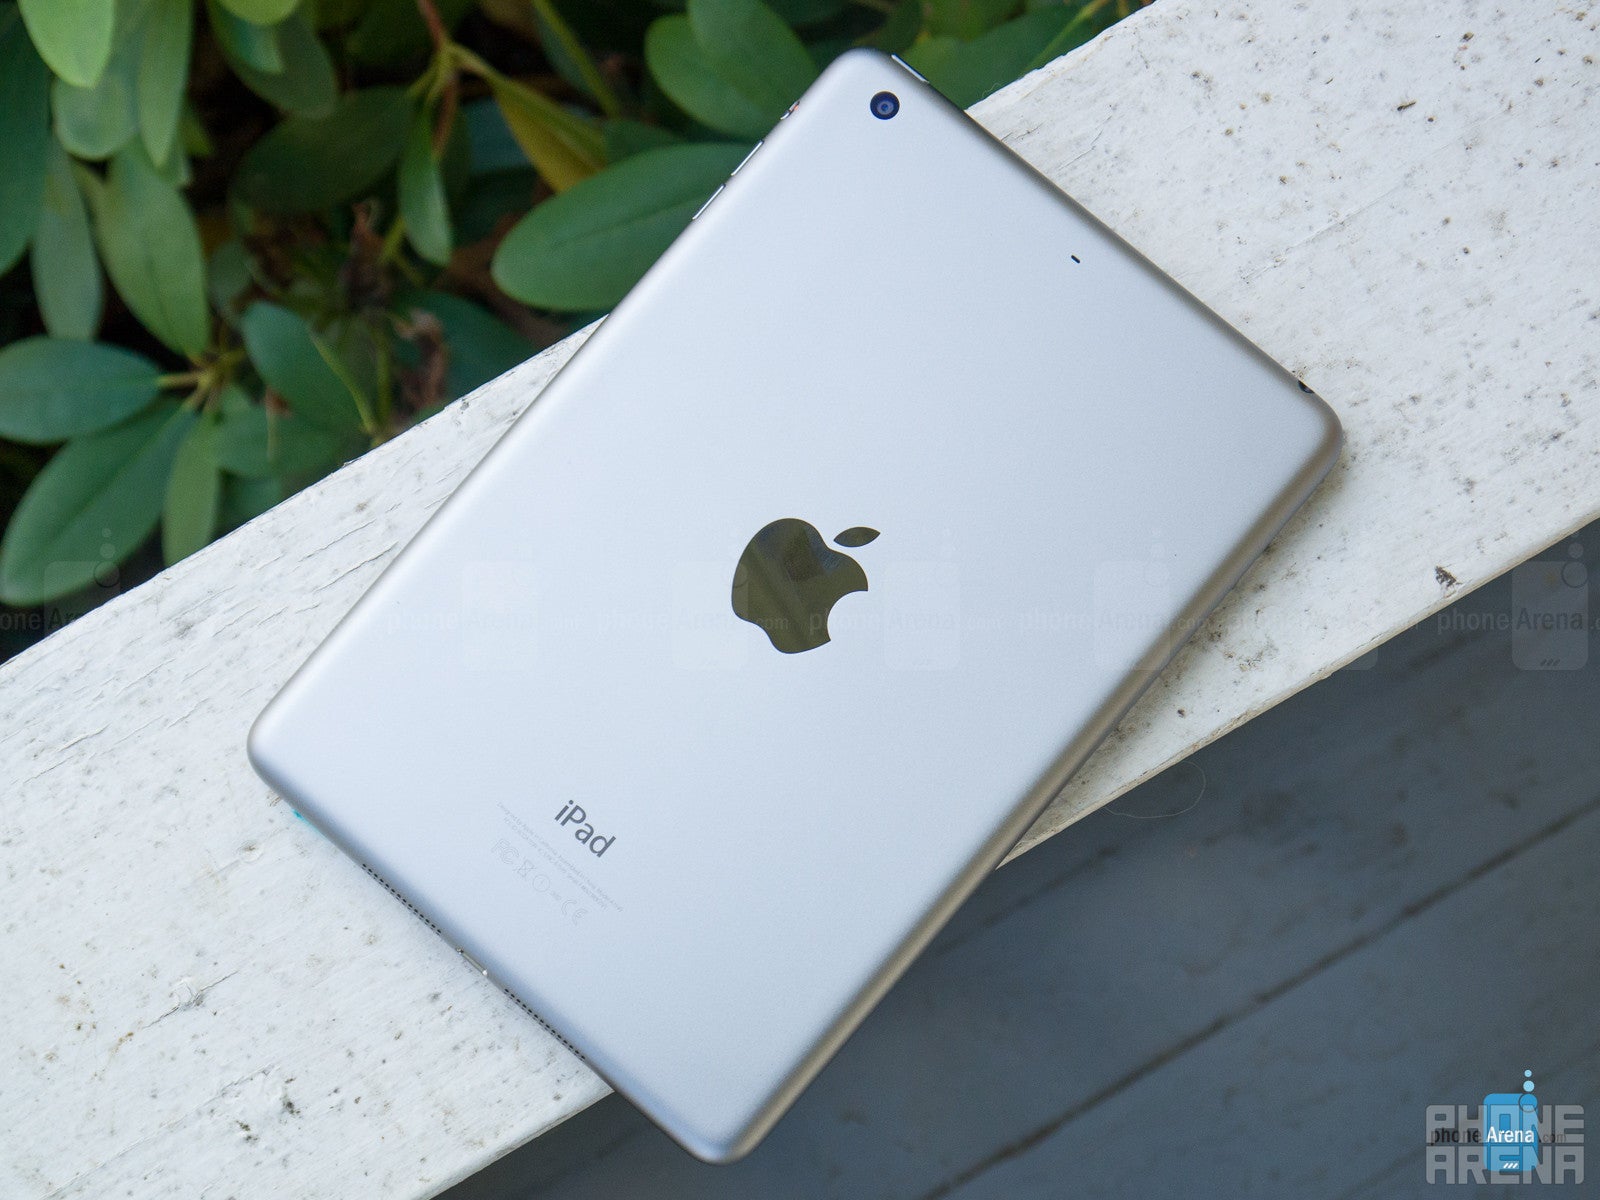 Apple iPad mini 3 Review